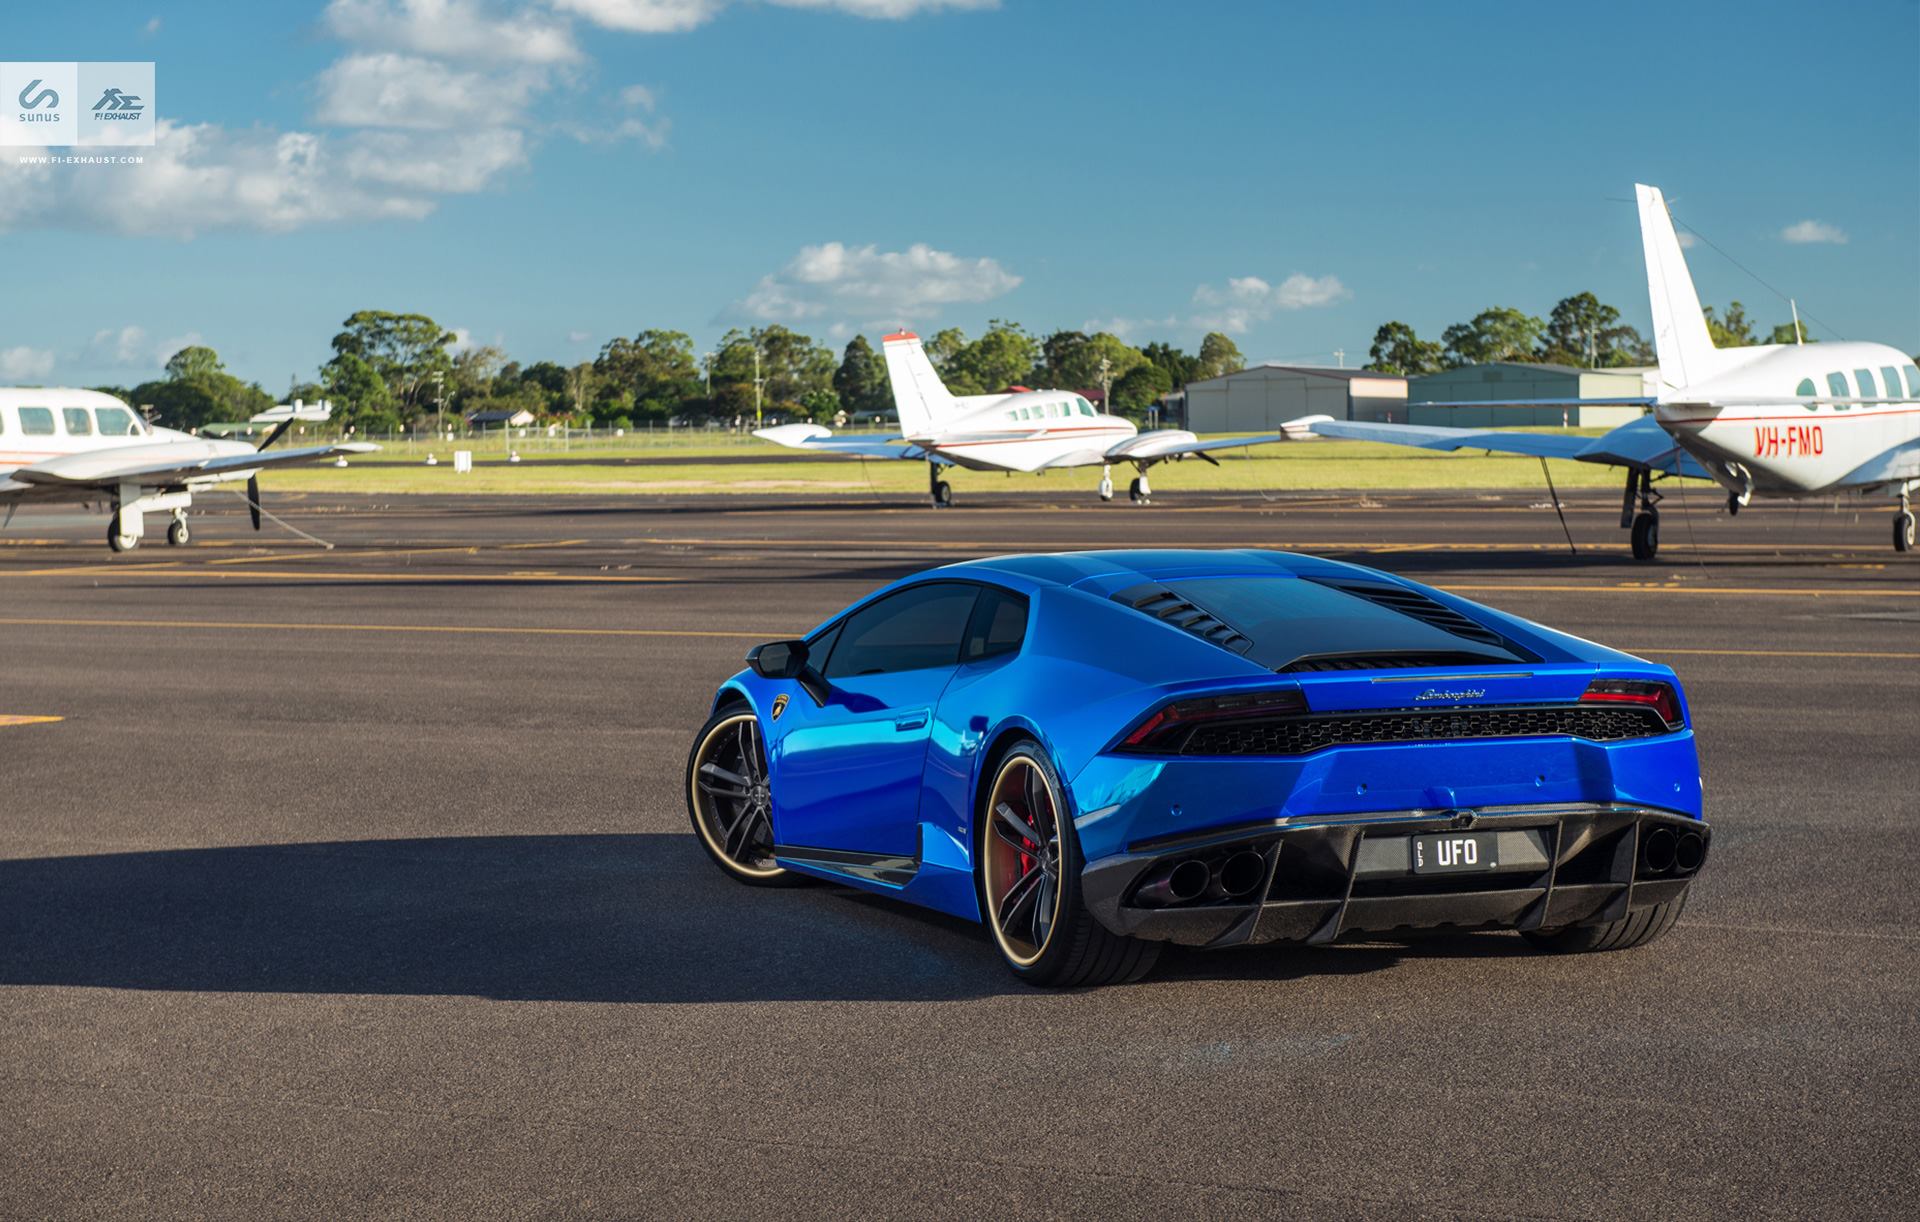 Stunning Blue Chrome Lamborghini Huracan by Sunus ...